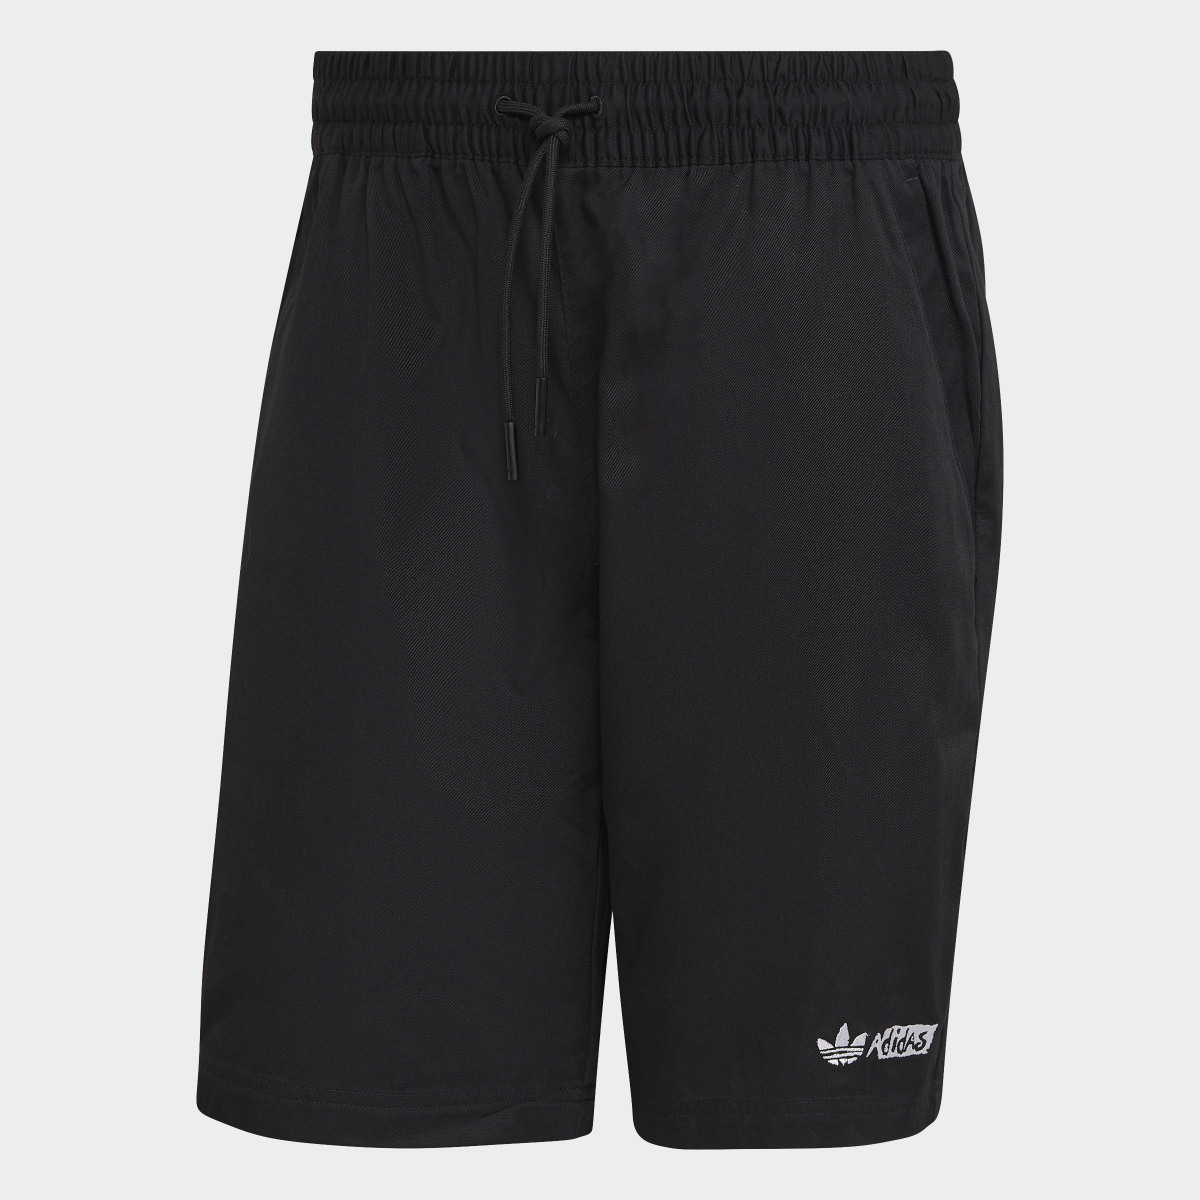 Adidas Twill Shorts. 4